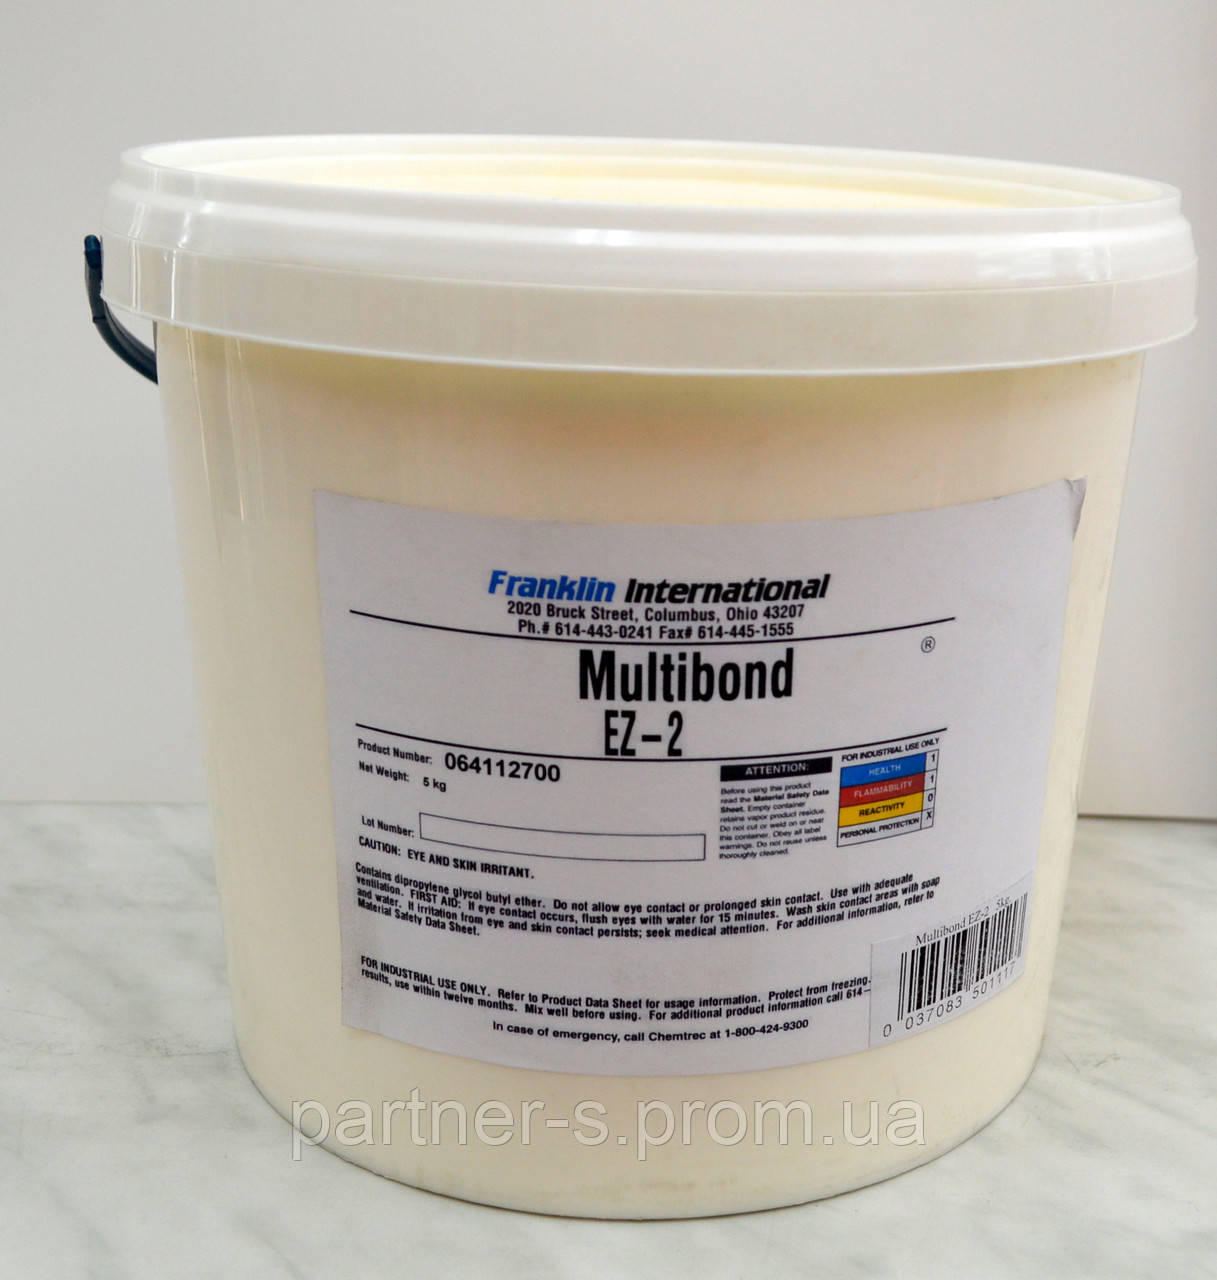 Професійний клей Multibond® EZ-2 ТМ "TITEBOND" (5 кг)